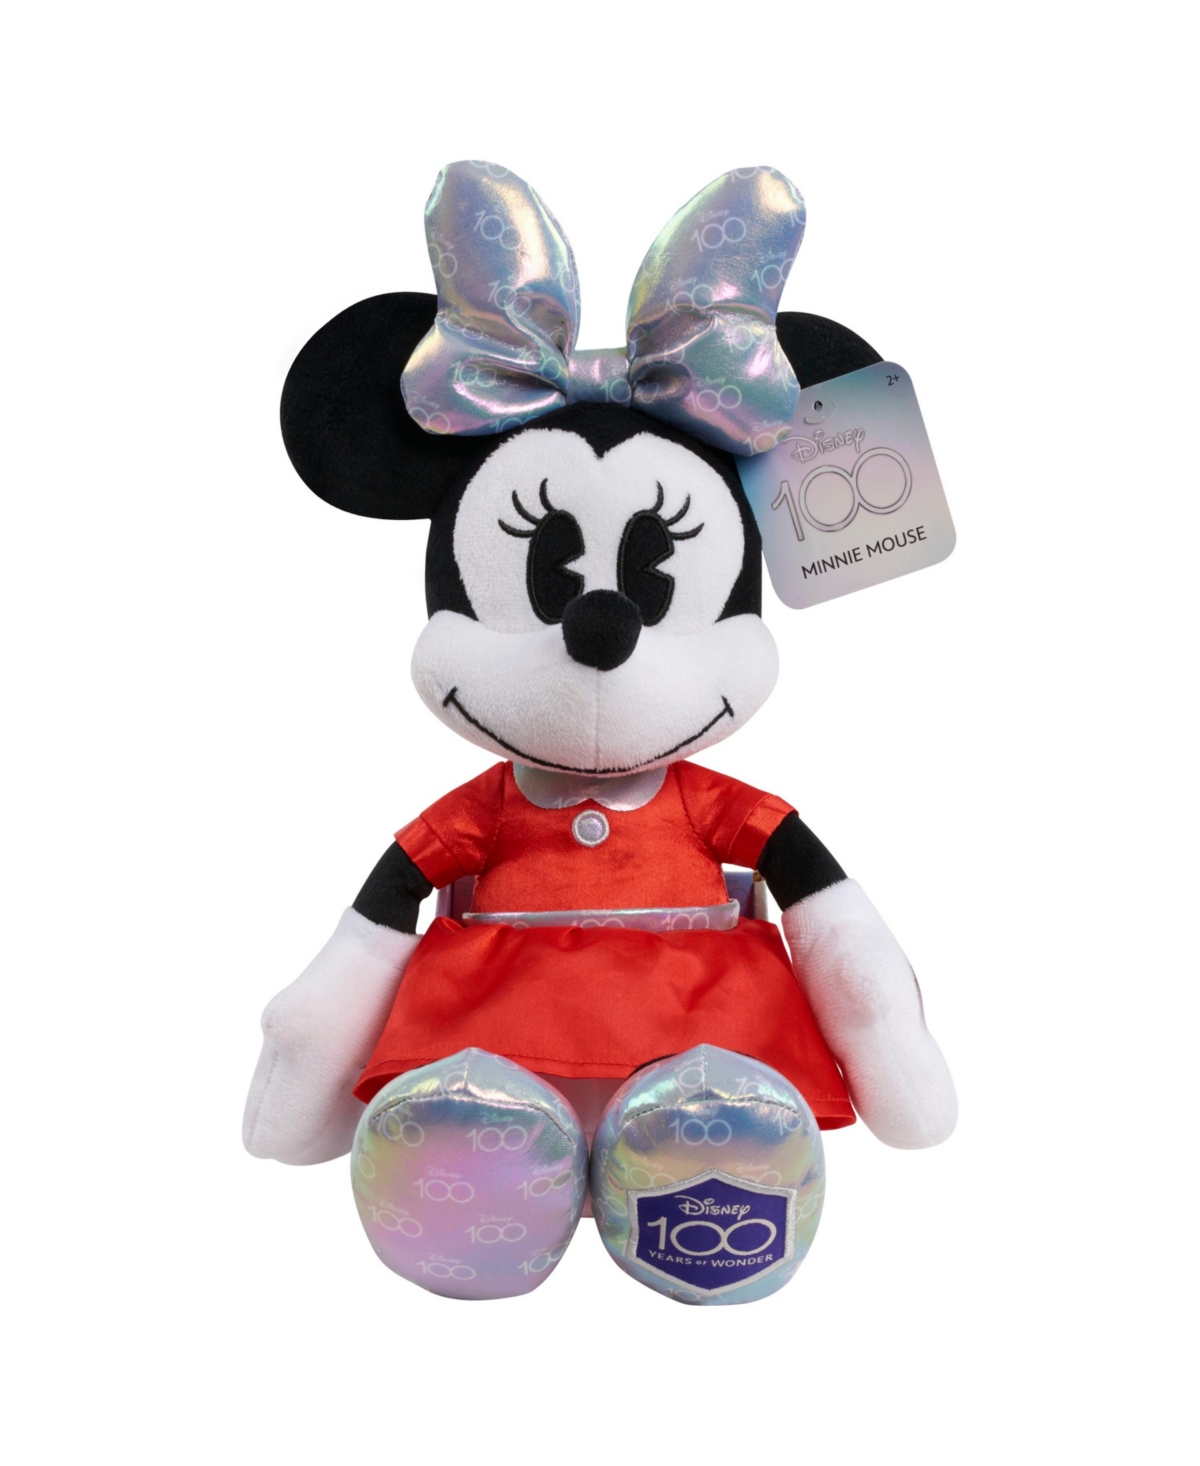 Disney 100 Years Of Wonder Macy's Mickey & Minnie Mouse Plush Stuffed Animal-created For Macy's